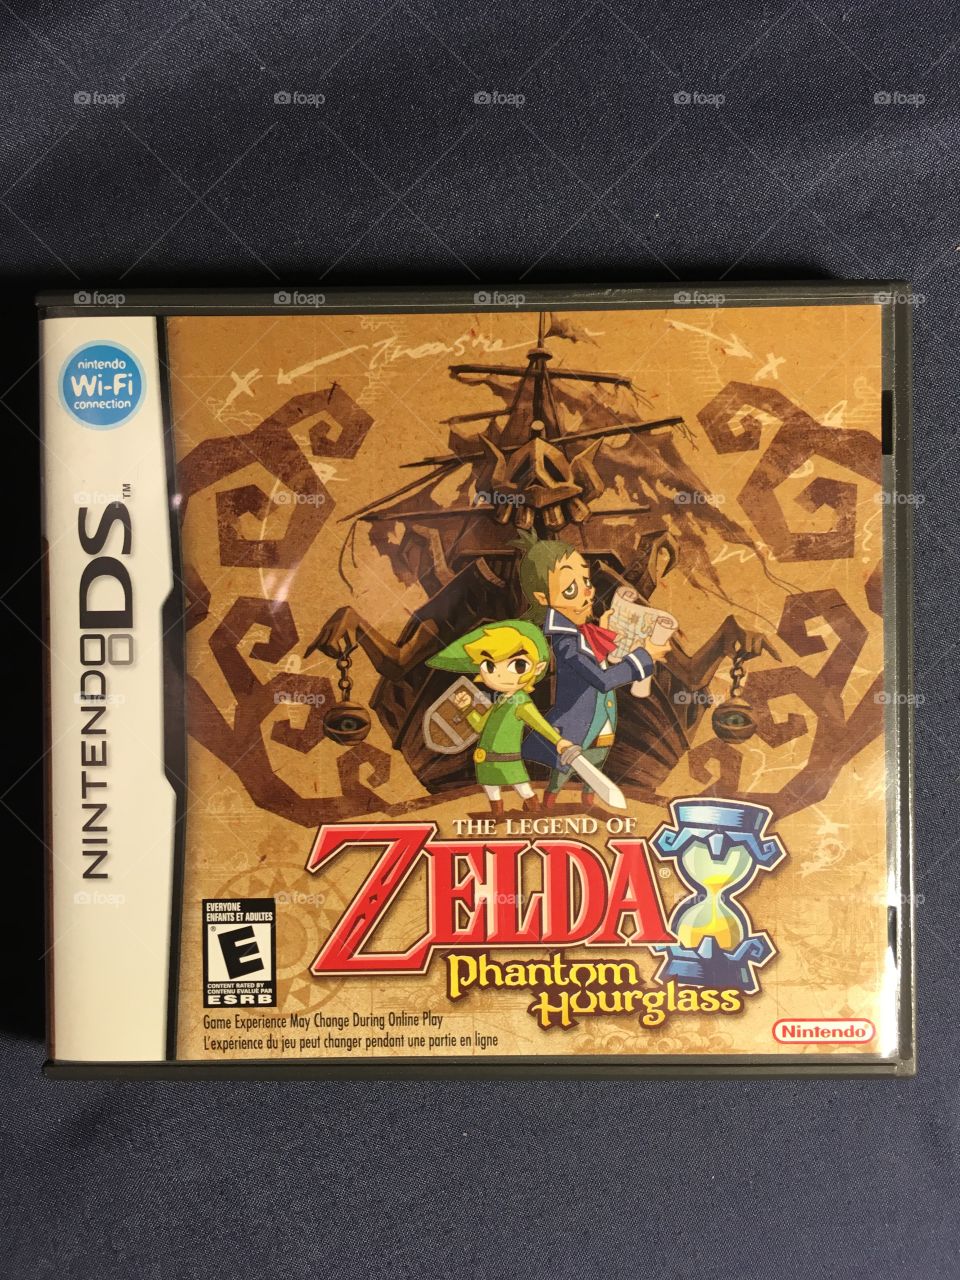 The Legend f Zelda - Phantom Hourglass , video game for the Nintendo DS - released 2007